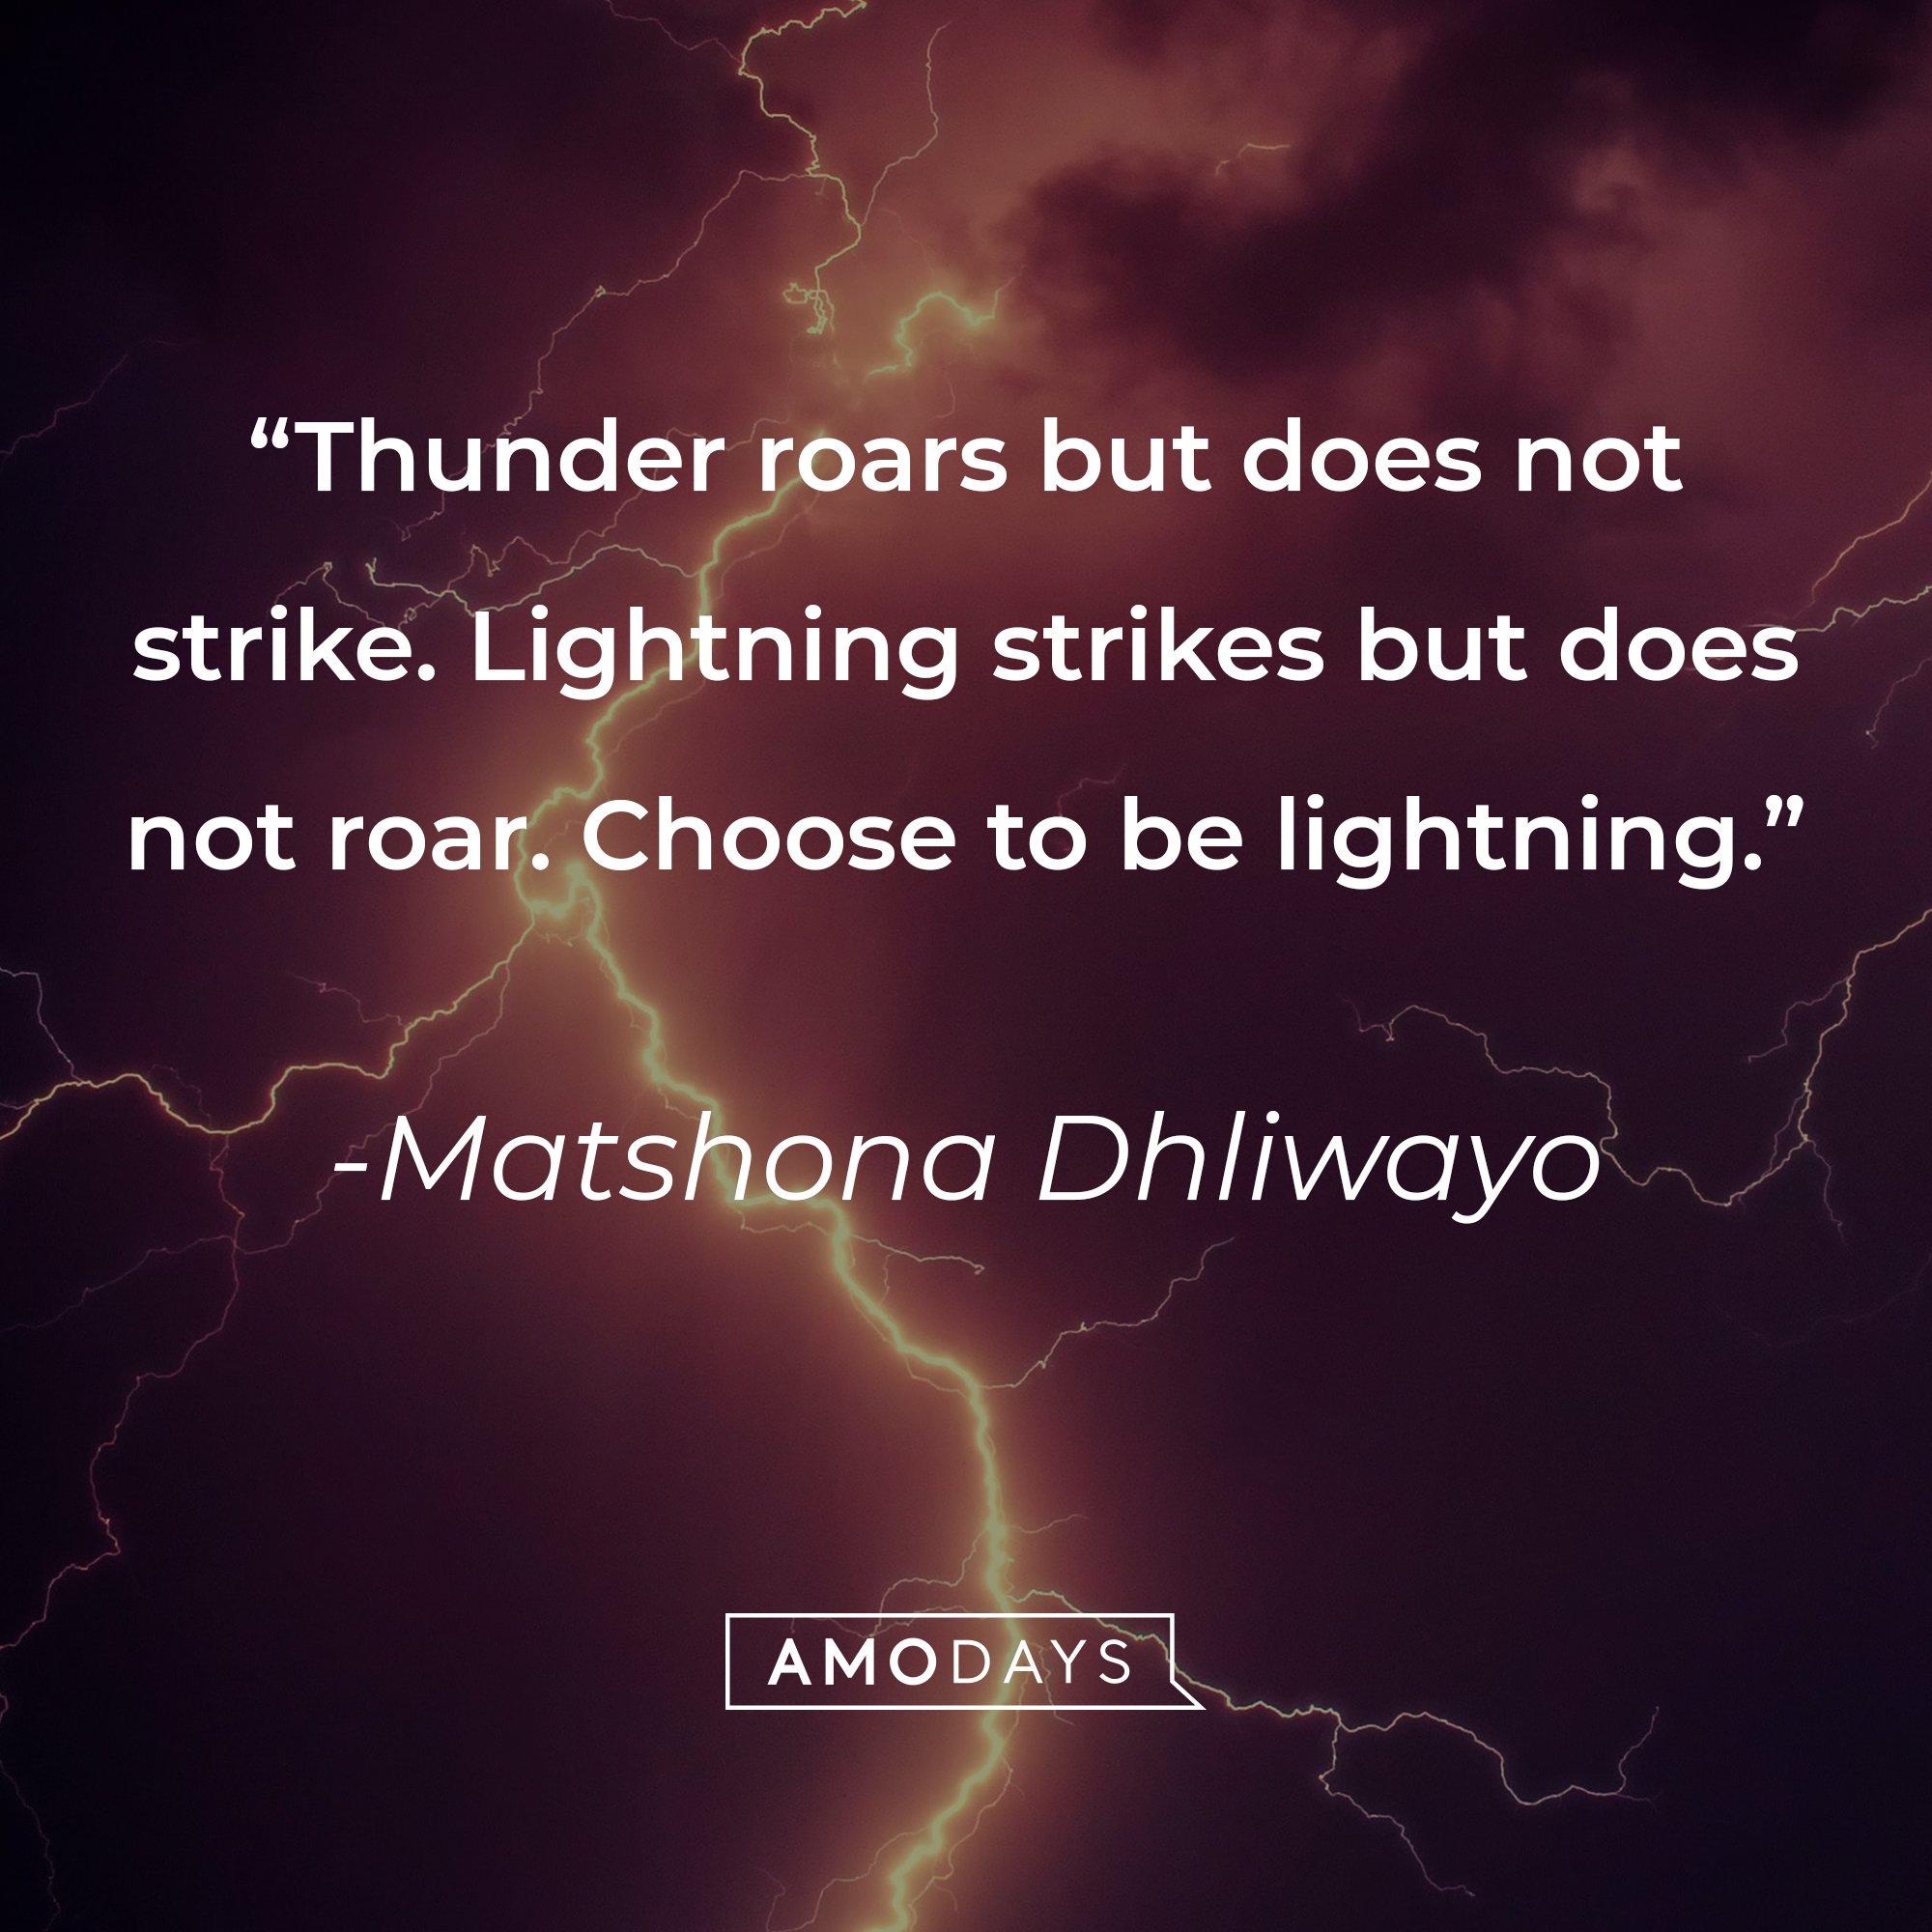 Matshona Dhliwayo’s quote: "Thunder roars but does not strike. Lightning strikes but does not roar. Choose to be lightning." | Image: AmoDays    